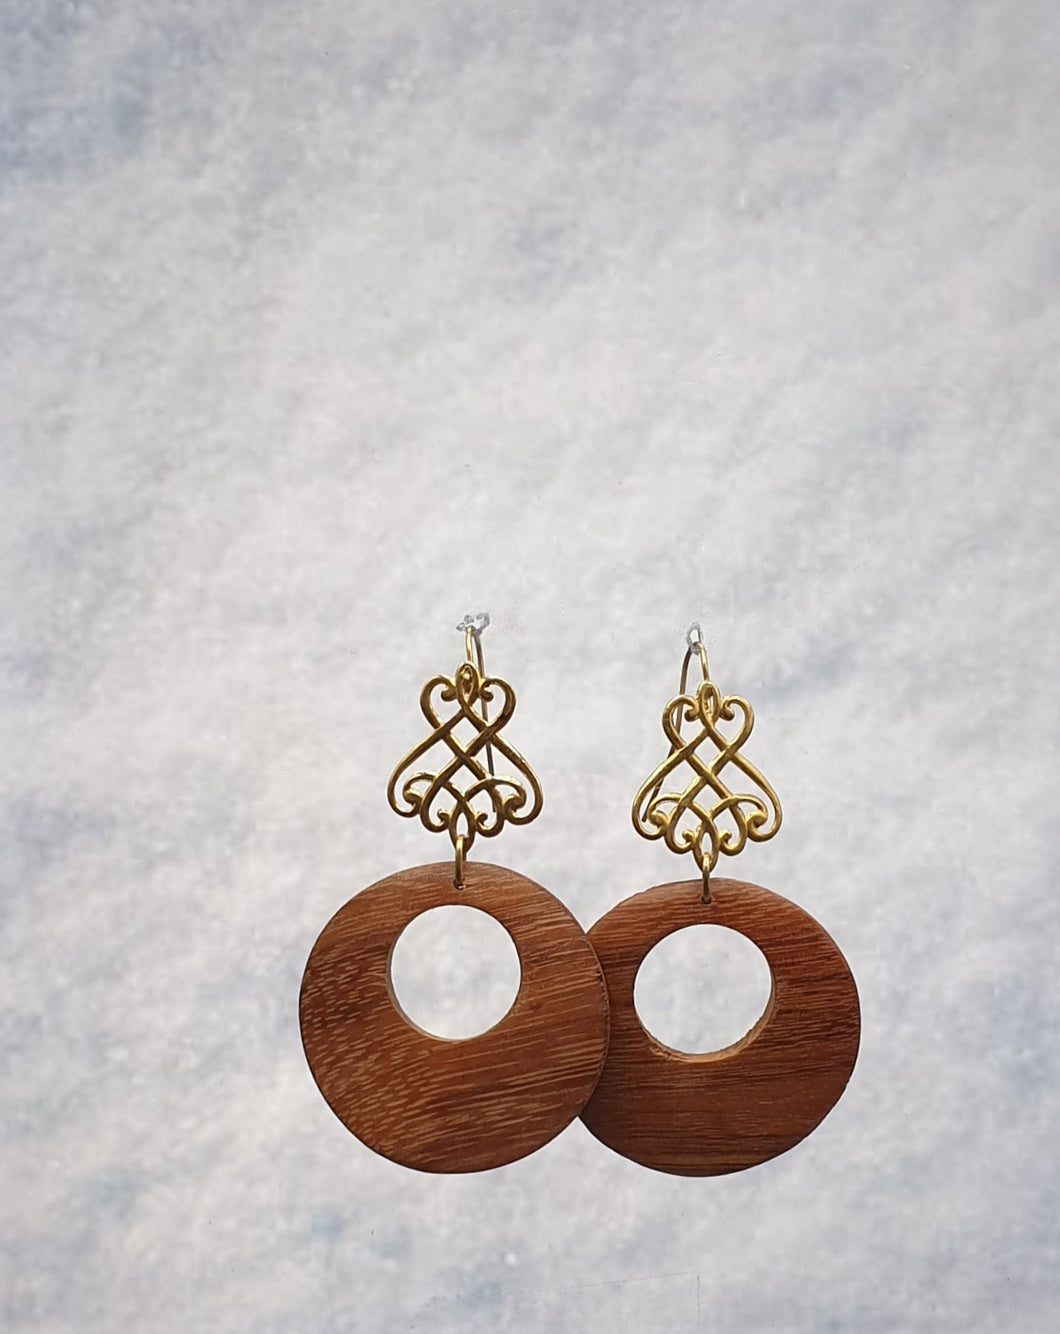 NEW golden metal dangle earrings with brown wooden element